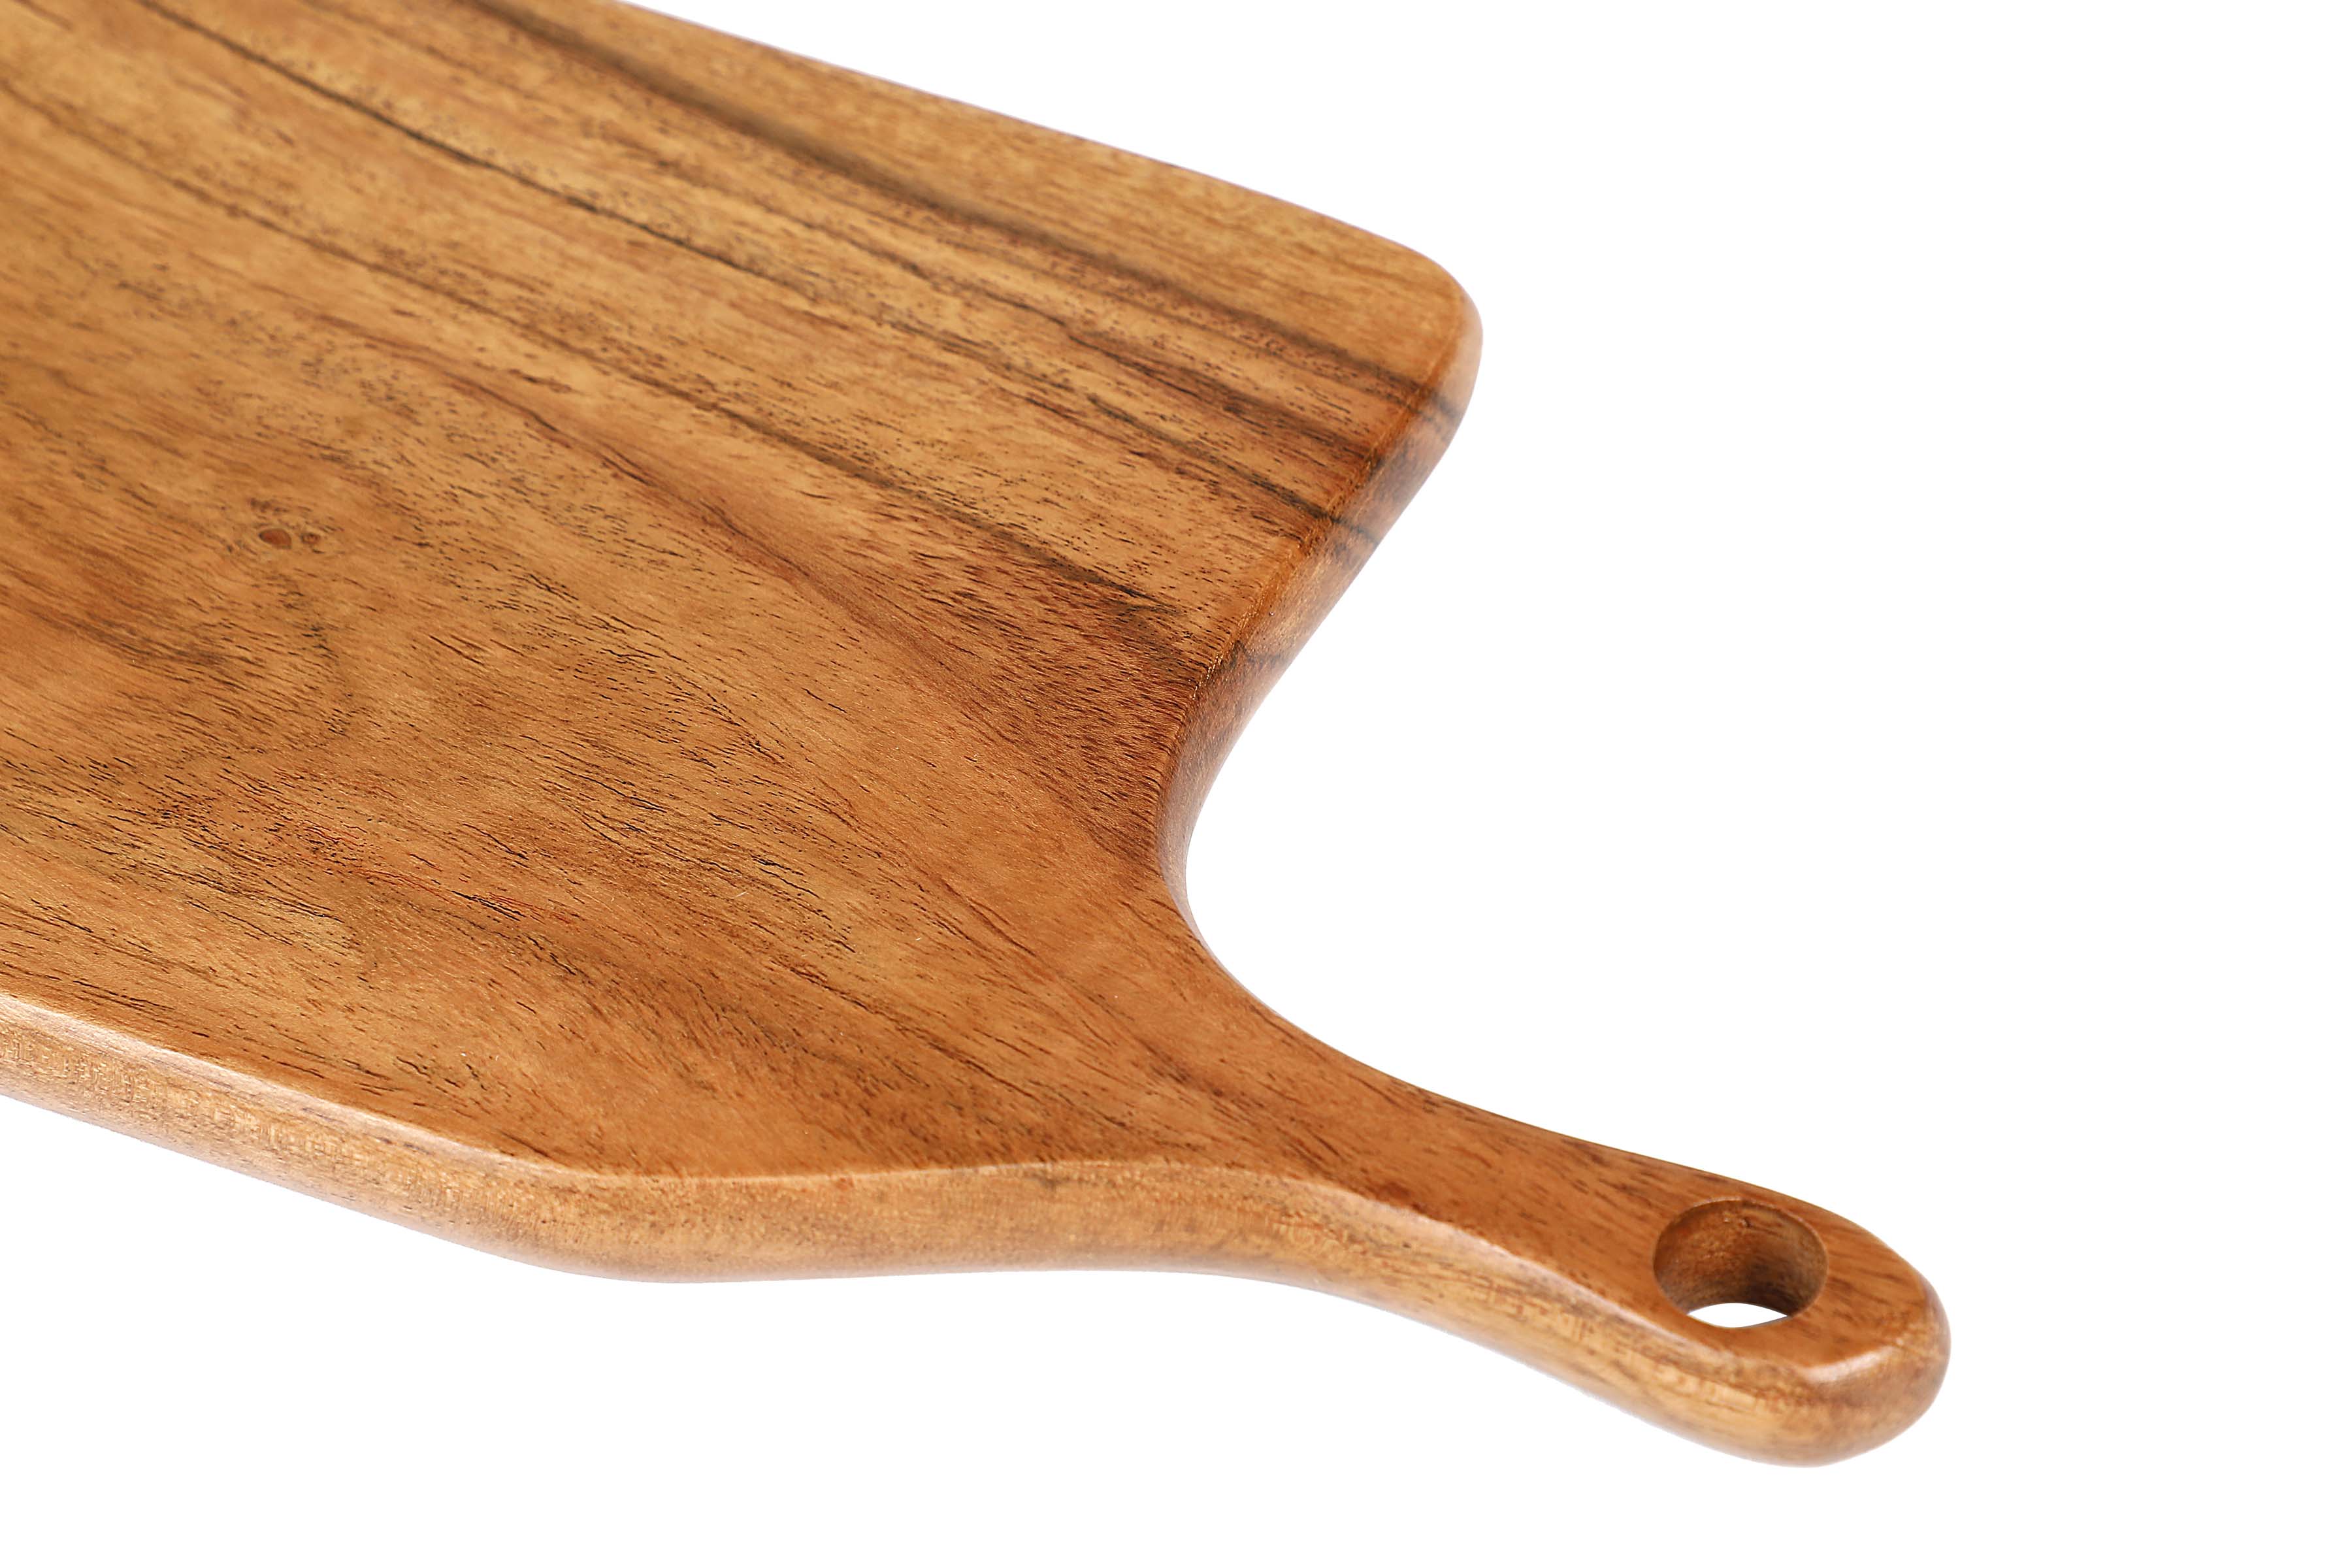 Handmade Sheesham Wood Chopping Board - 12X6.5X0.5 Inch (Set of 2)